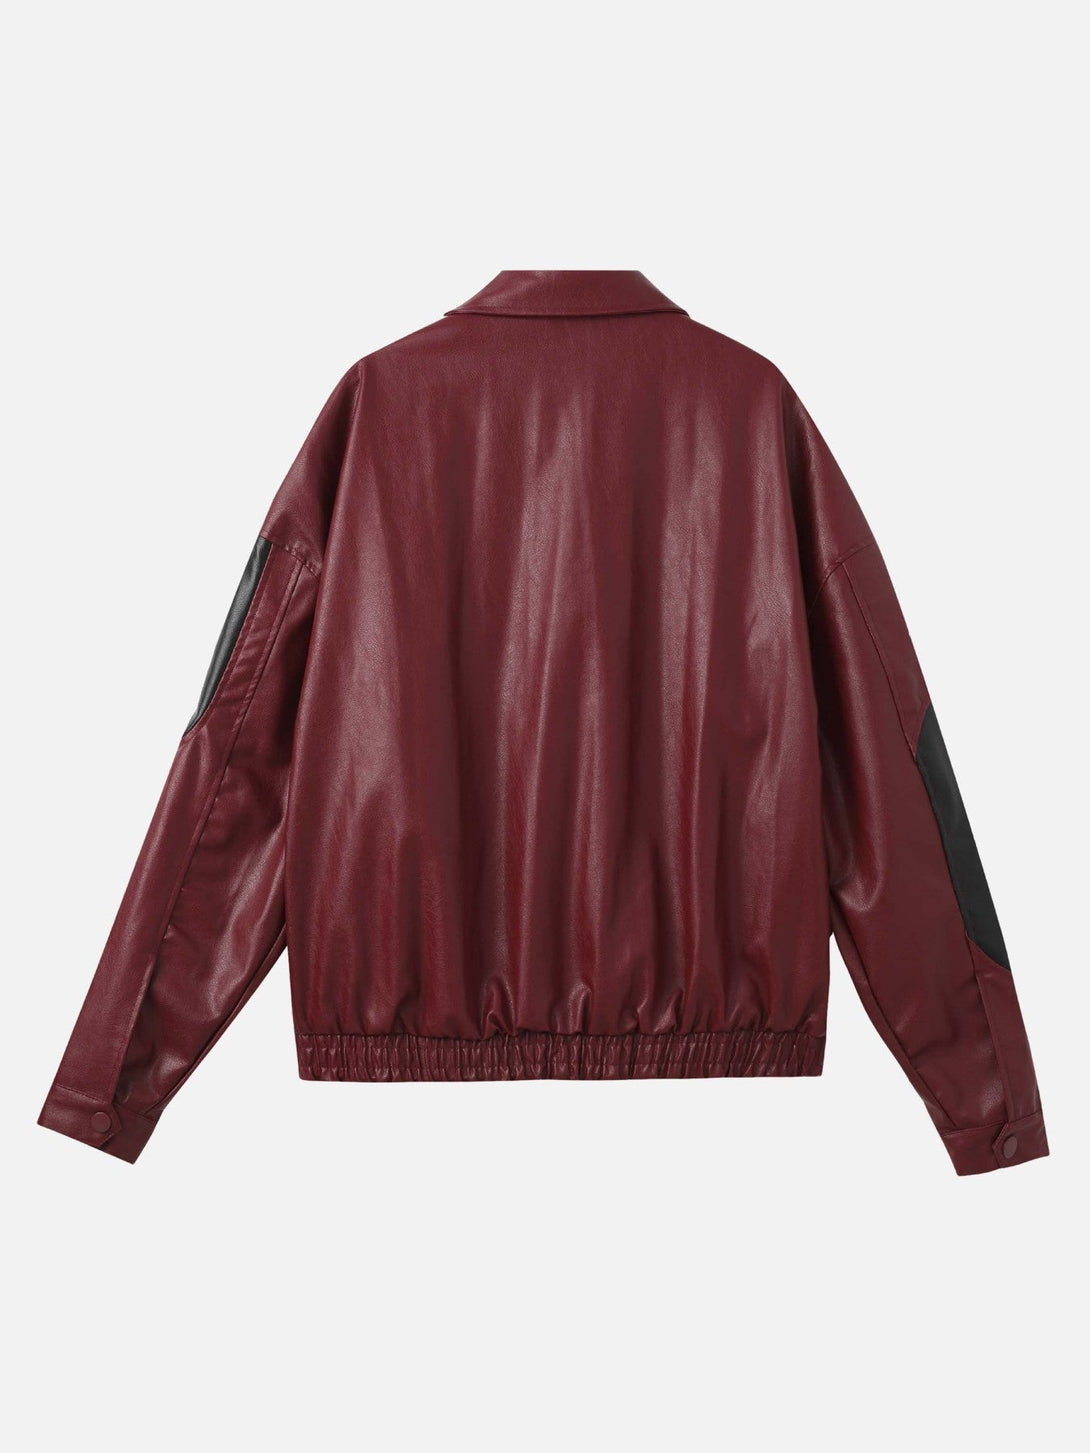 Majesda® - Loose Patchwork PU Leather Jacket - 1869- Outfit Ideas - Streetwear Fashion - majesda.com